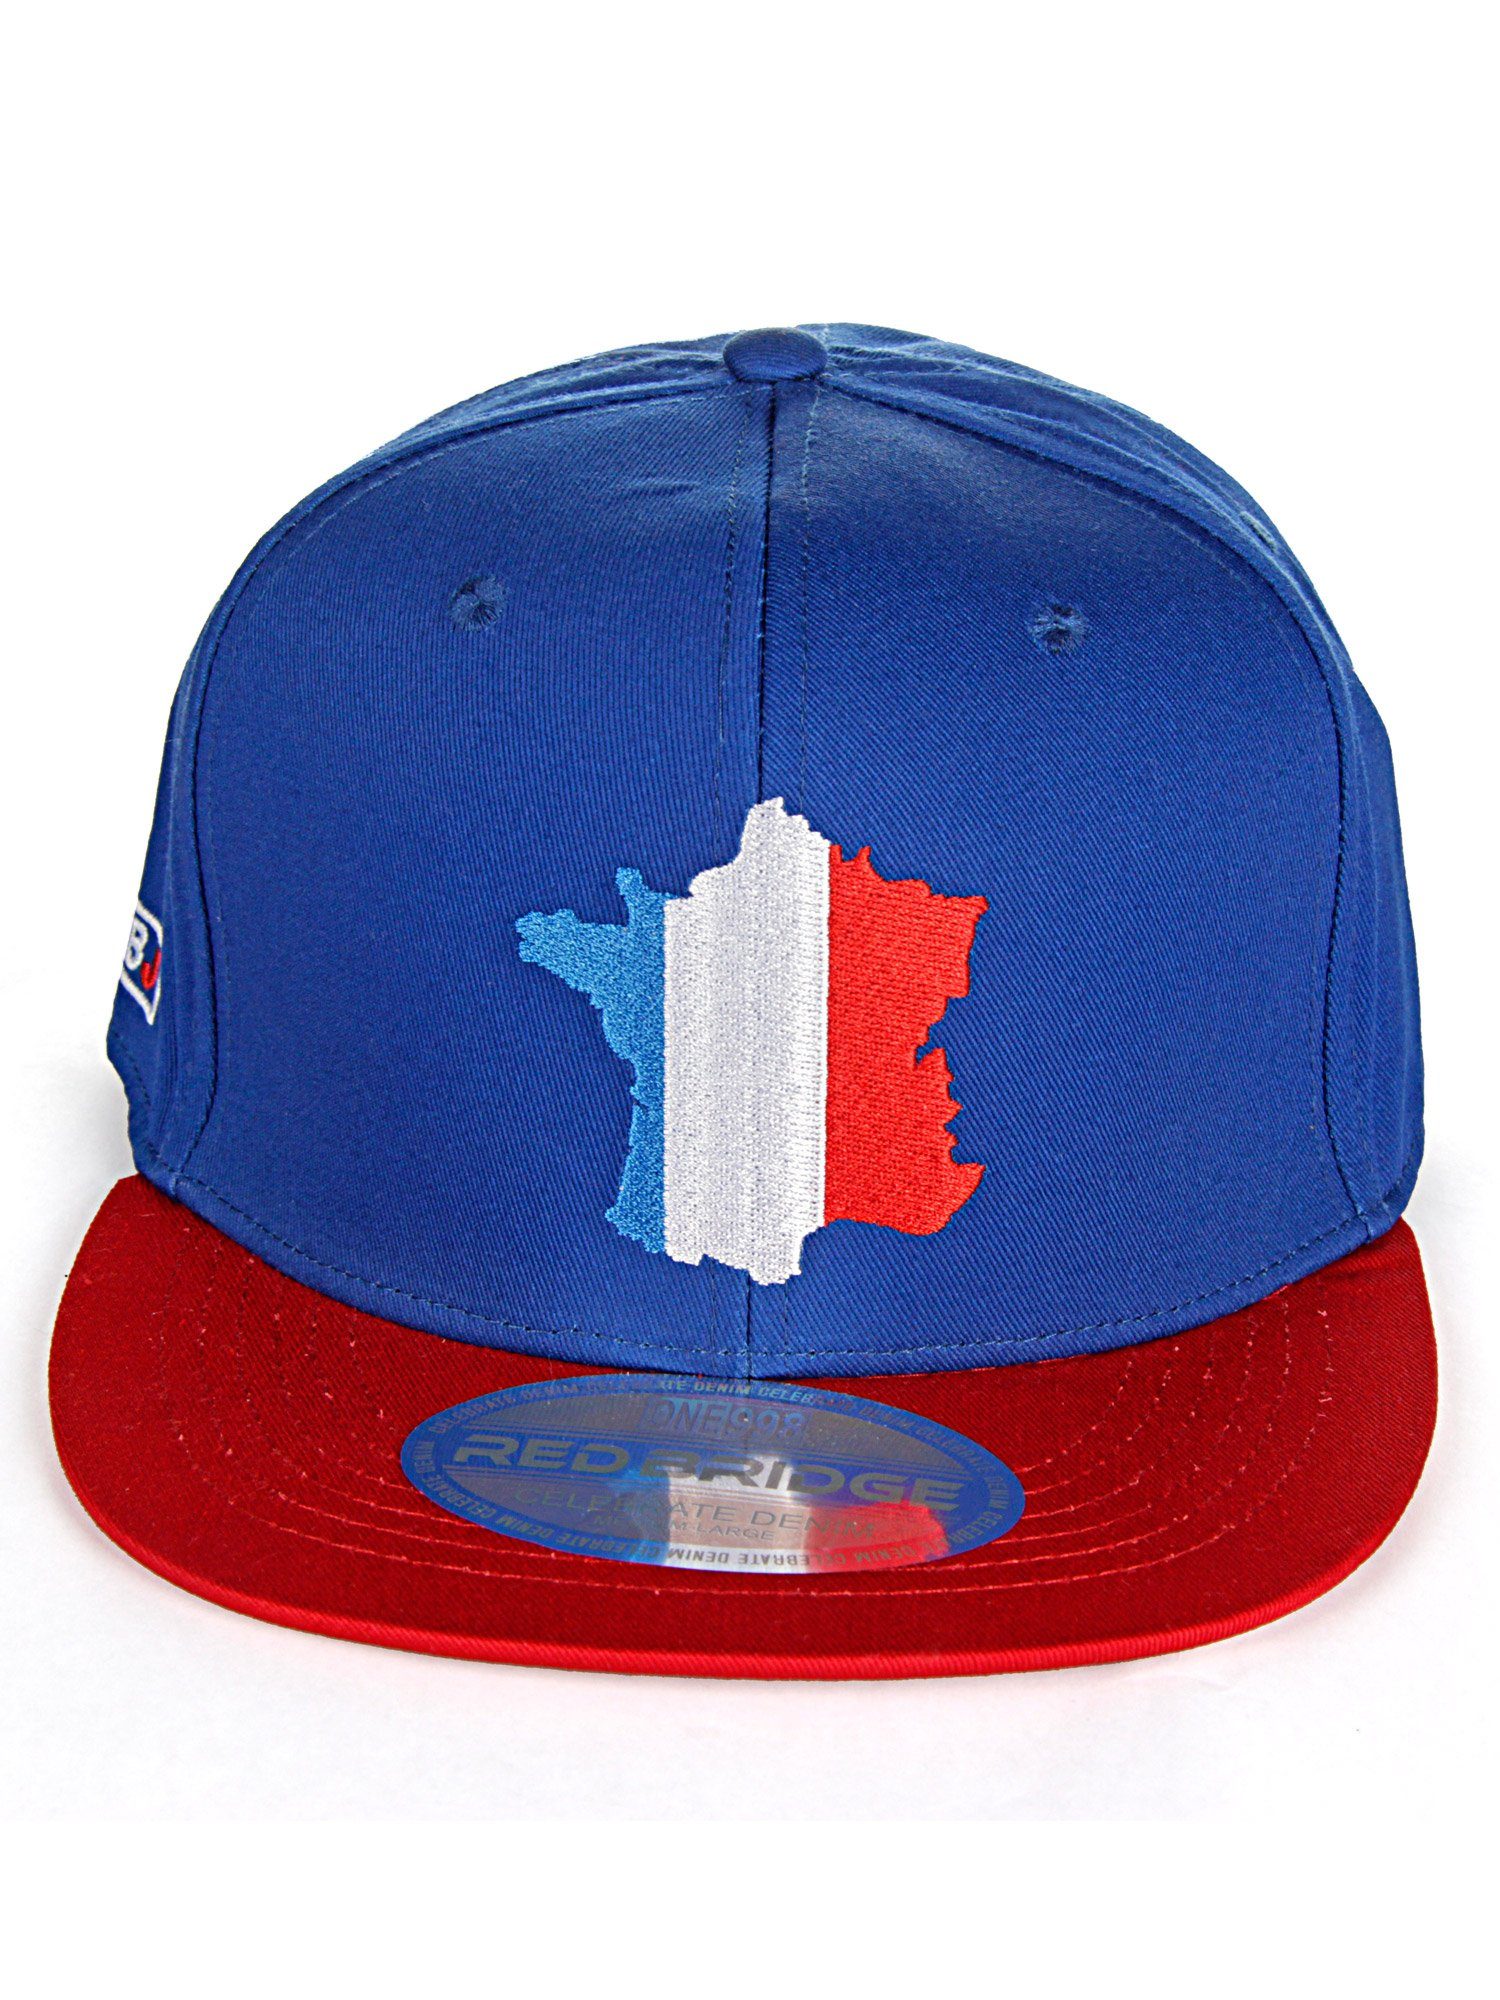 RedBridge Baseball Cap Carlton mit Frankreichmotiv | Baseball Caps